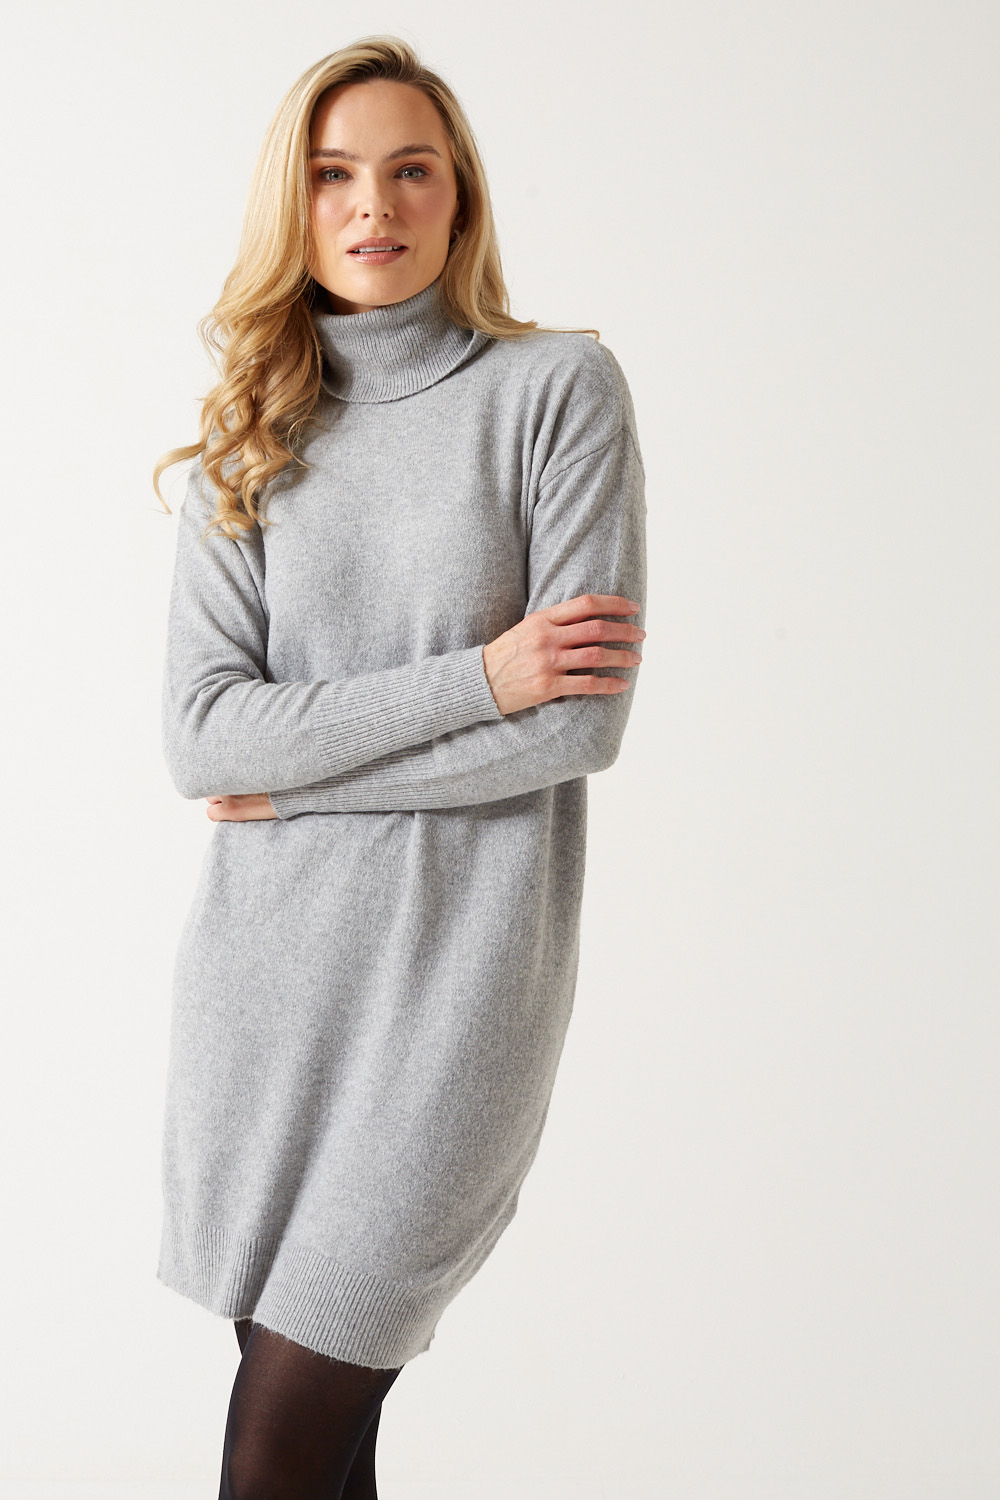 Jumper Moda iCLOTHING Light in Dress iCLOTHING Brilliant Vero Grey - | Rollneck